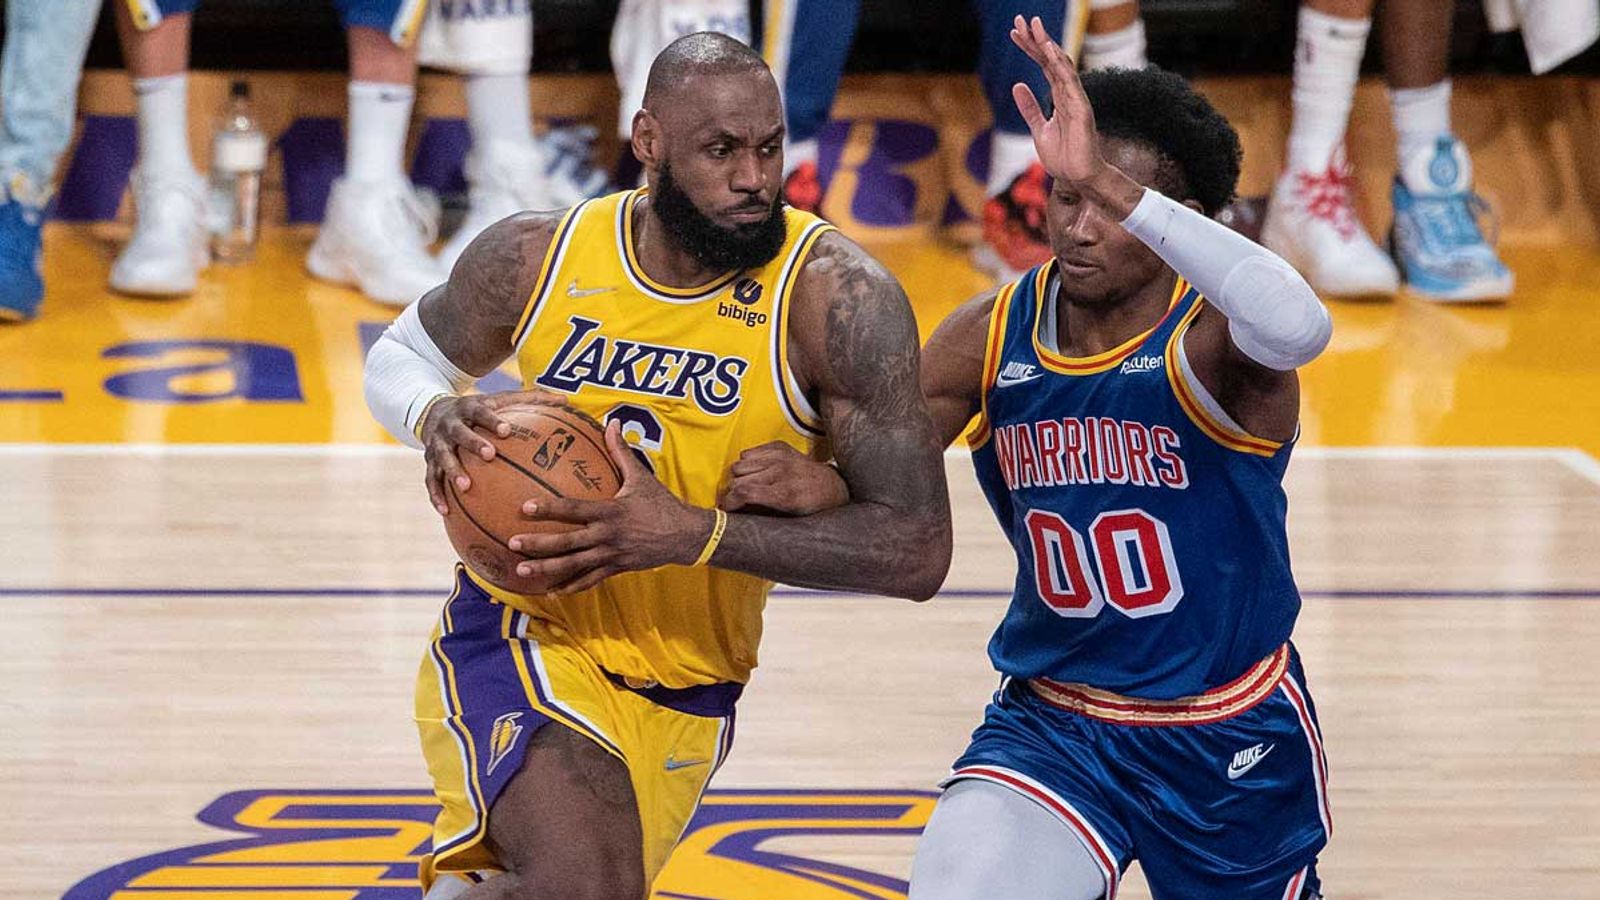 NBA: Spielplan offiziell! Golden State Warriors vs. LA Lakers & Celtics vs. 76ers zum Auftakt